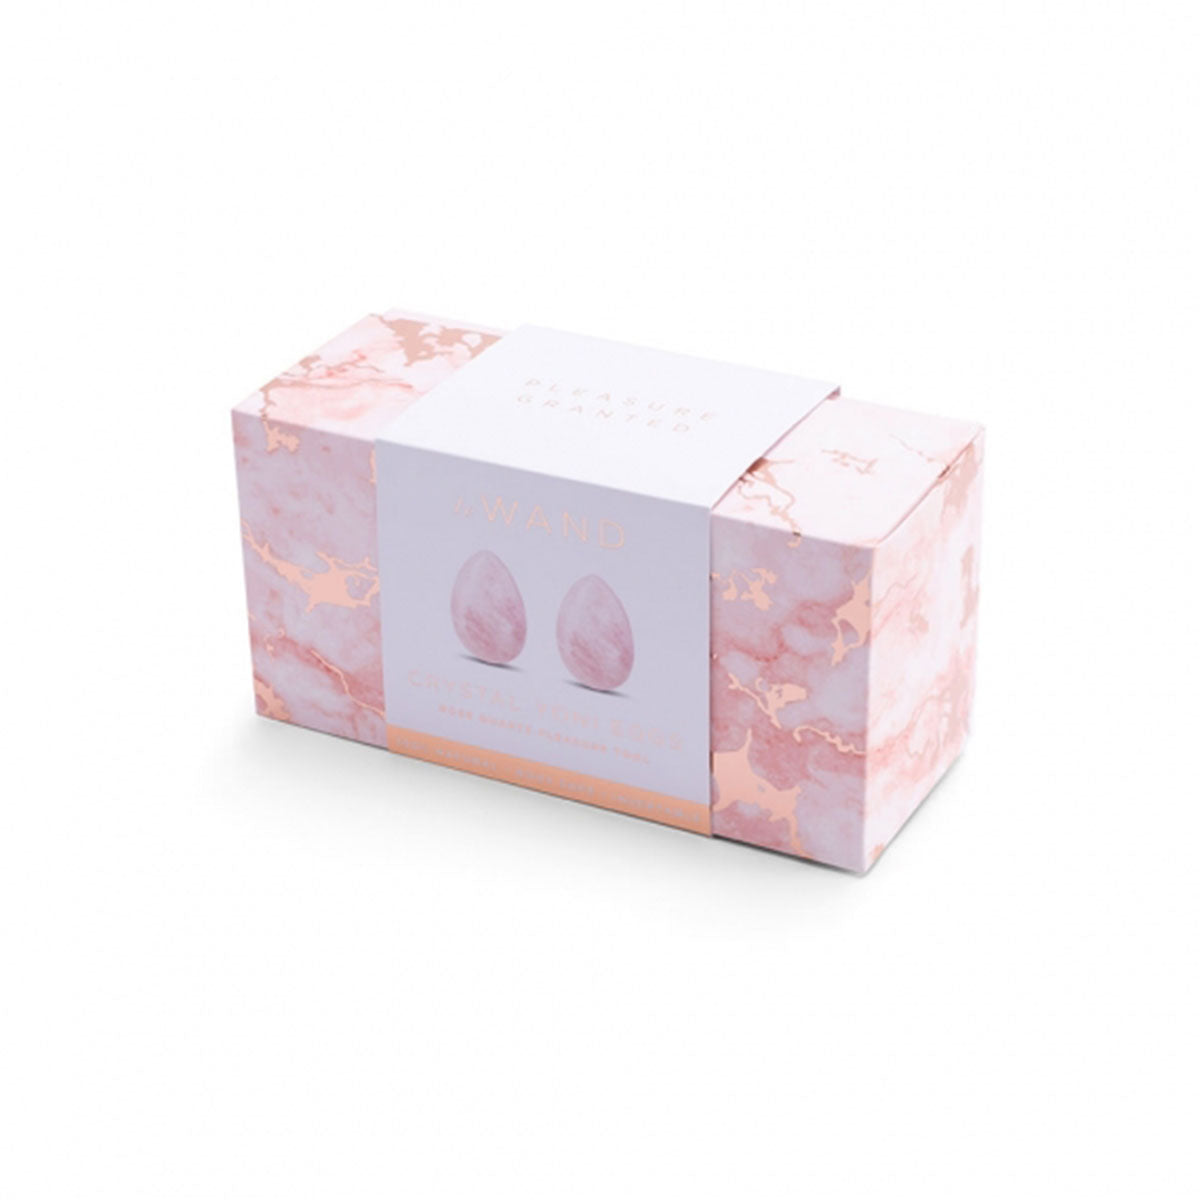 Le Wand Crystal Yoni Eggs - Rose Quartz Intimates Adult Boutique